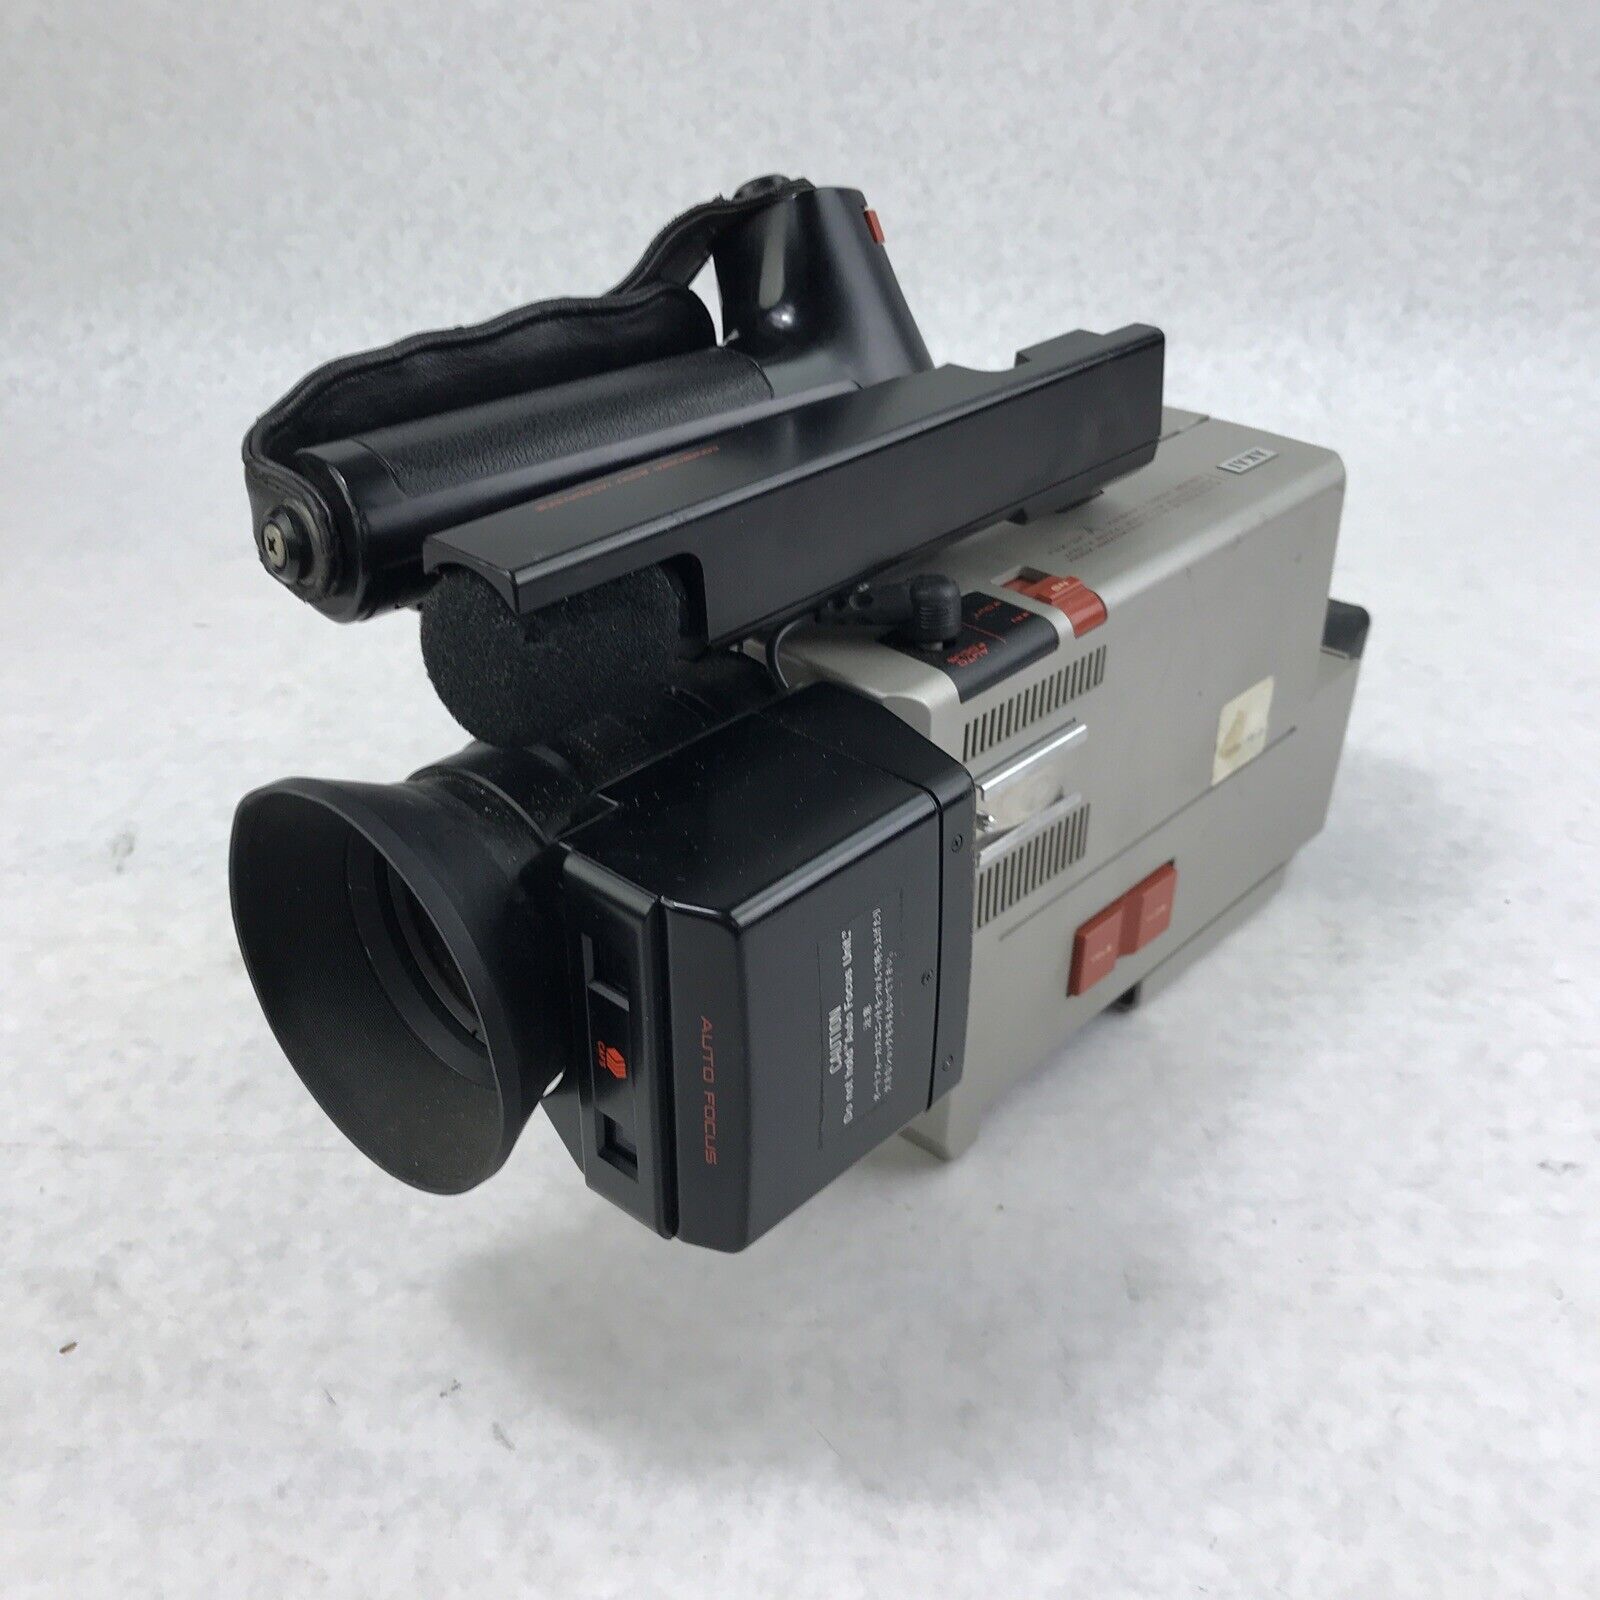 AKAI Color Video Camera VC-X1U W/ Condenser Boom Microphone and Power Cord